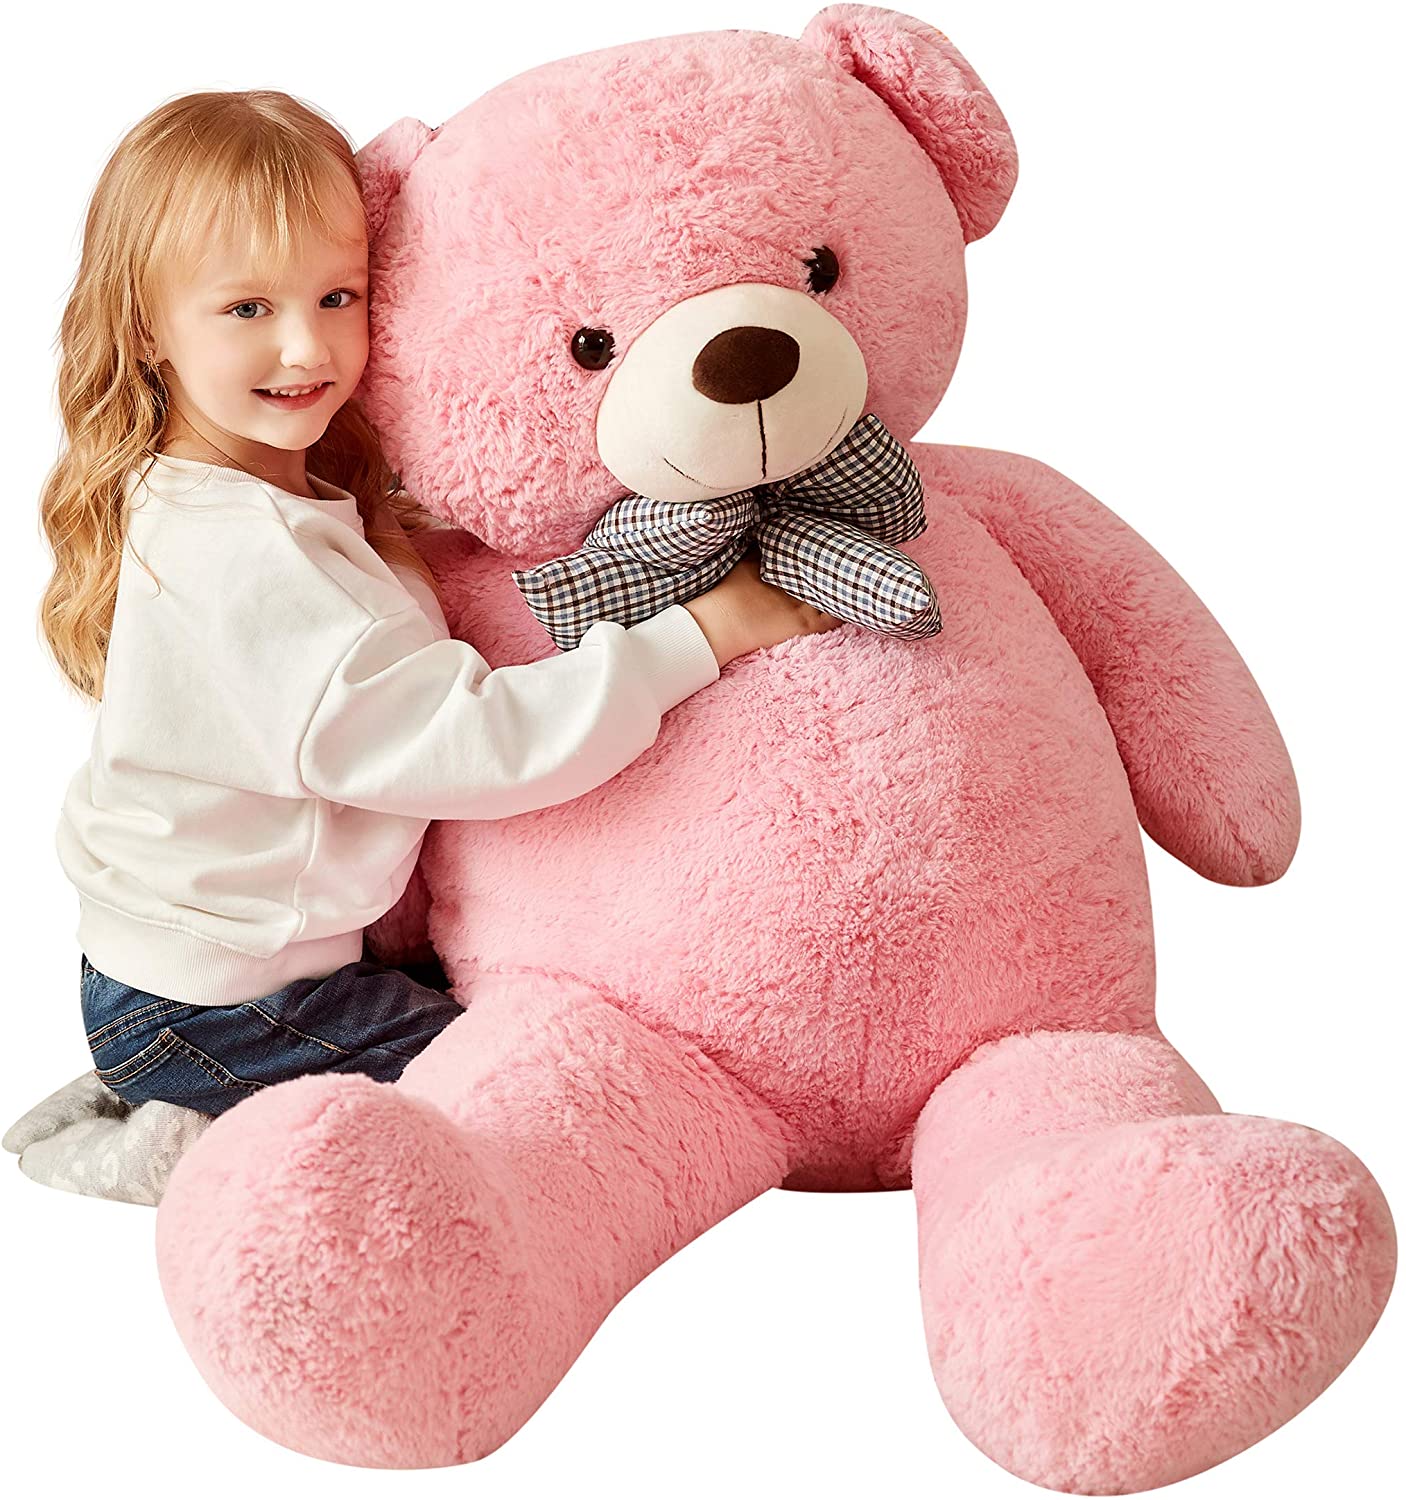 47" GIANT White Teddy Bear Stuffed Animal Huge Soft Plush Cute Toy Birthday Gift 